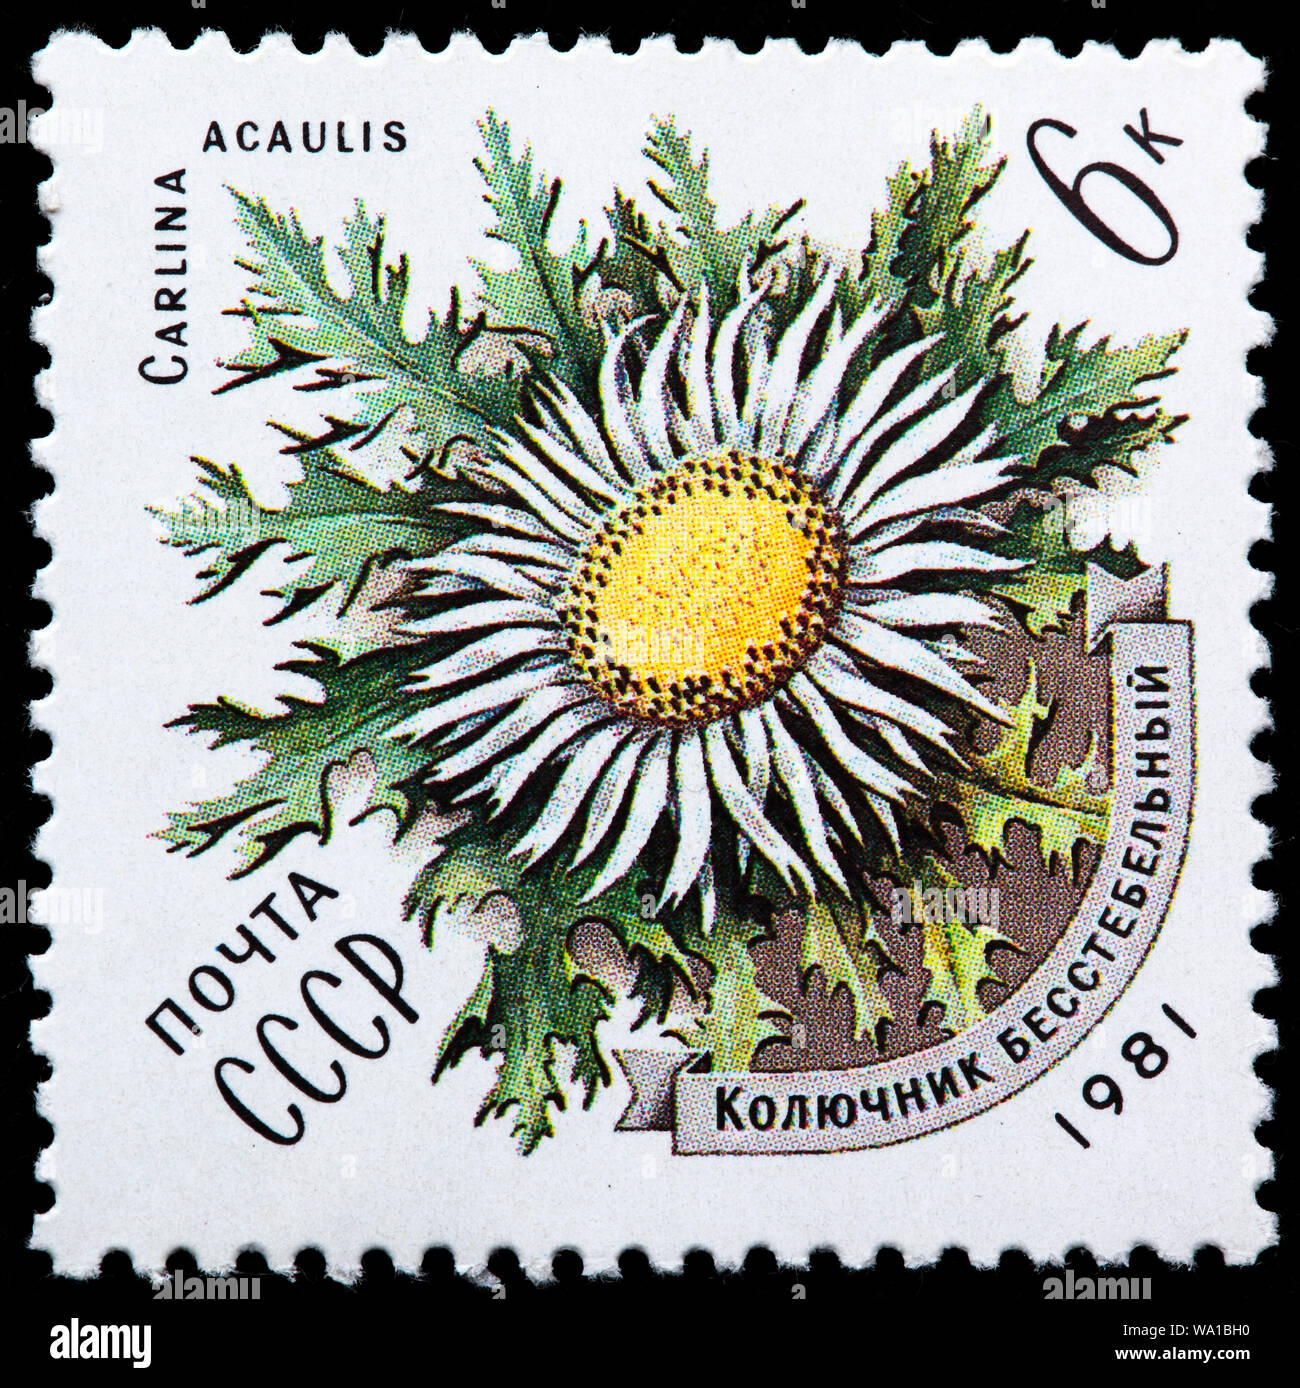 Carlina acaulis, stemless carline thistle, dwarf carline thistle, silver thistle, Flowers of the Carpathians, postage stamp, Russia, USSR, 1981 Stock Photo